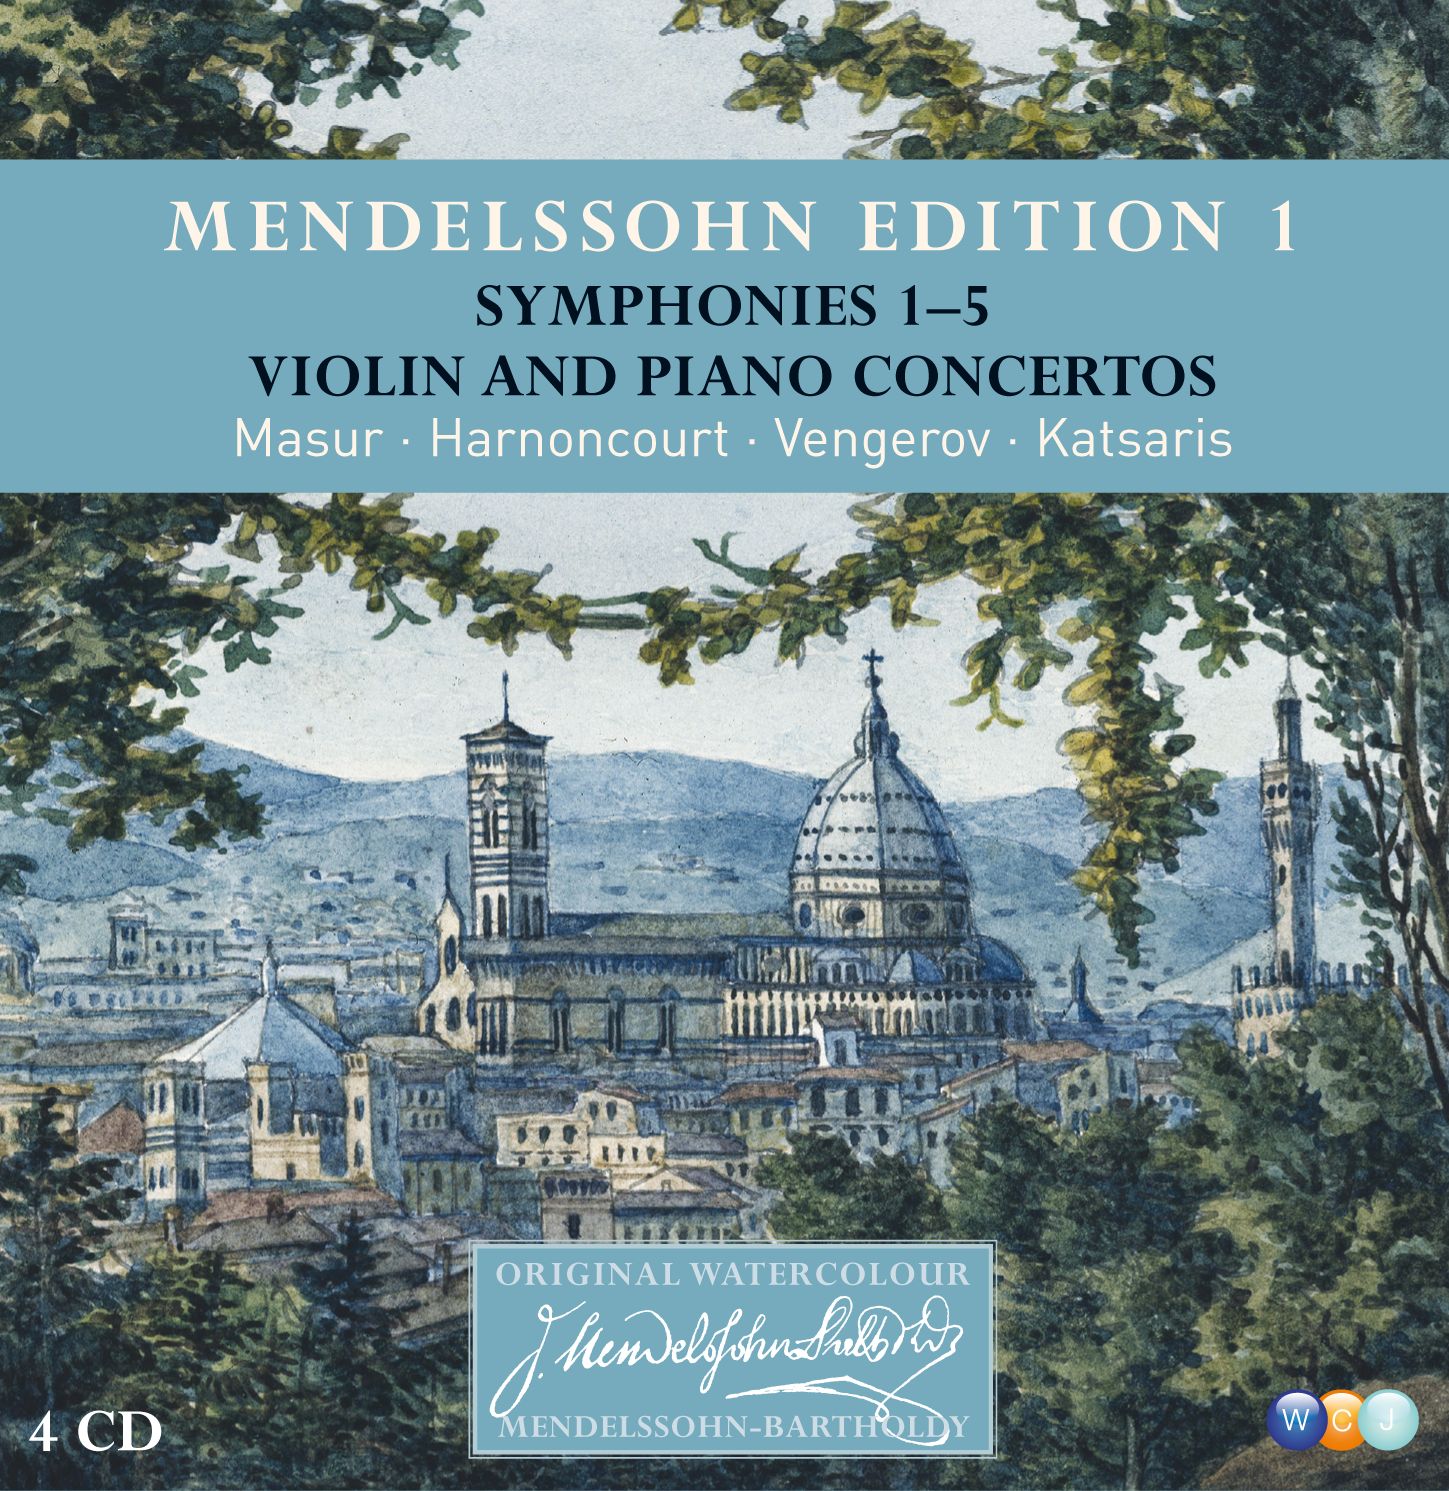 Mendelssohn Edition Vol.1 Orchestral Music | Warner Classics